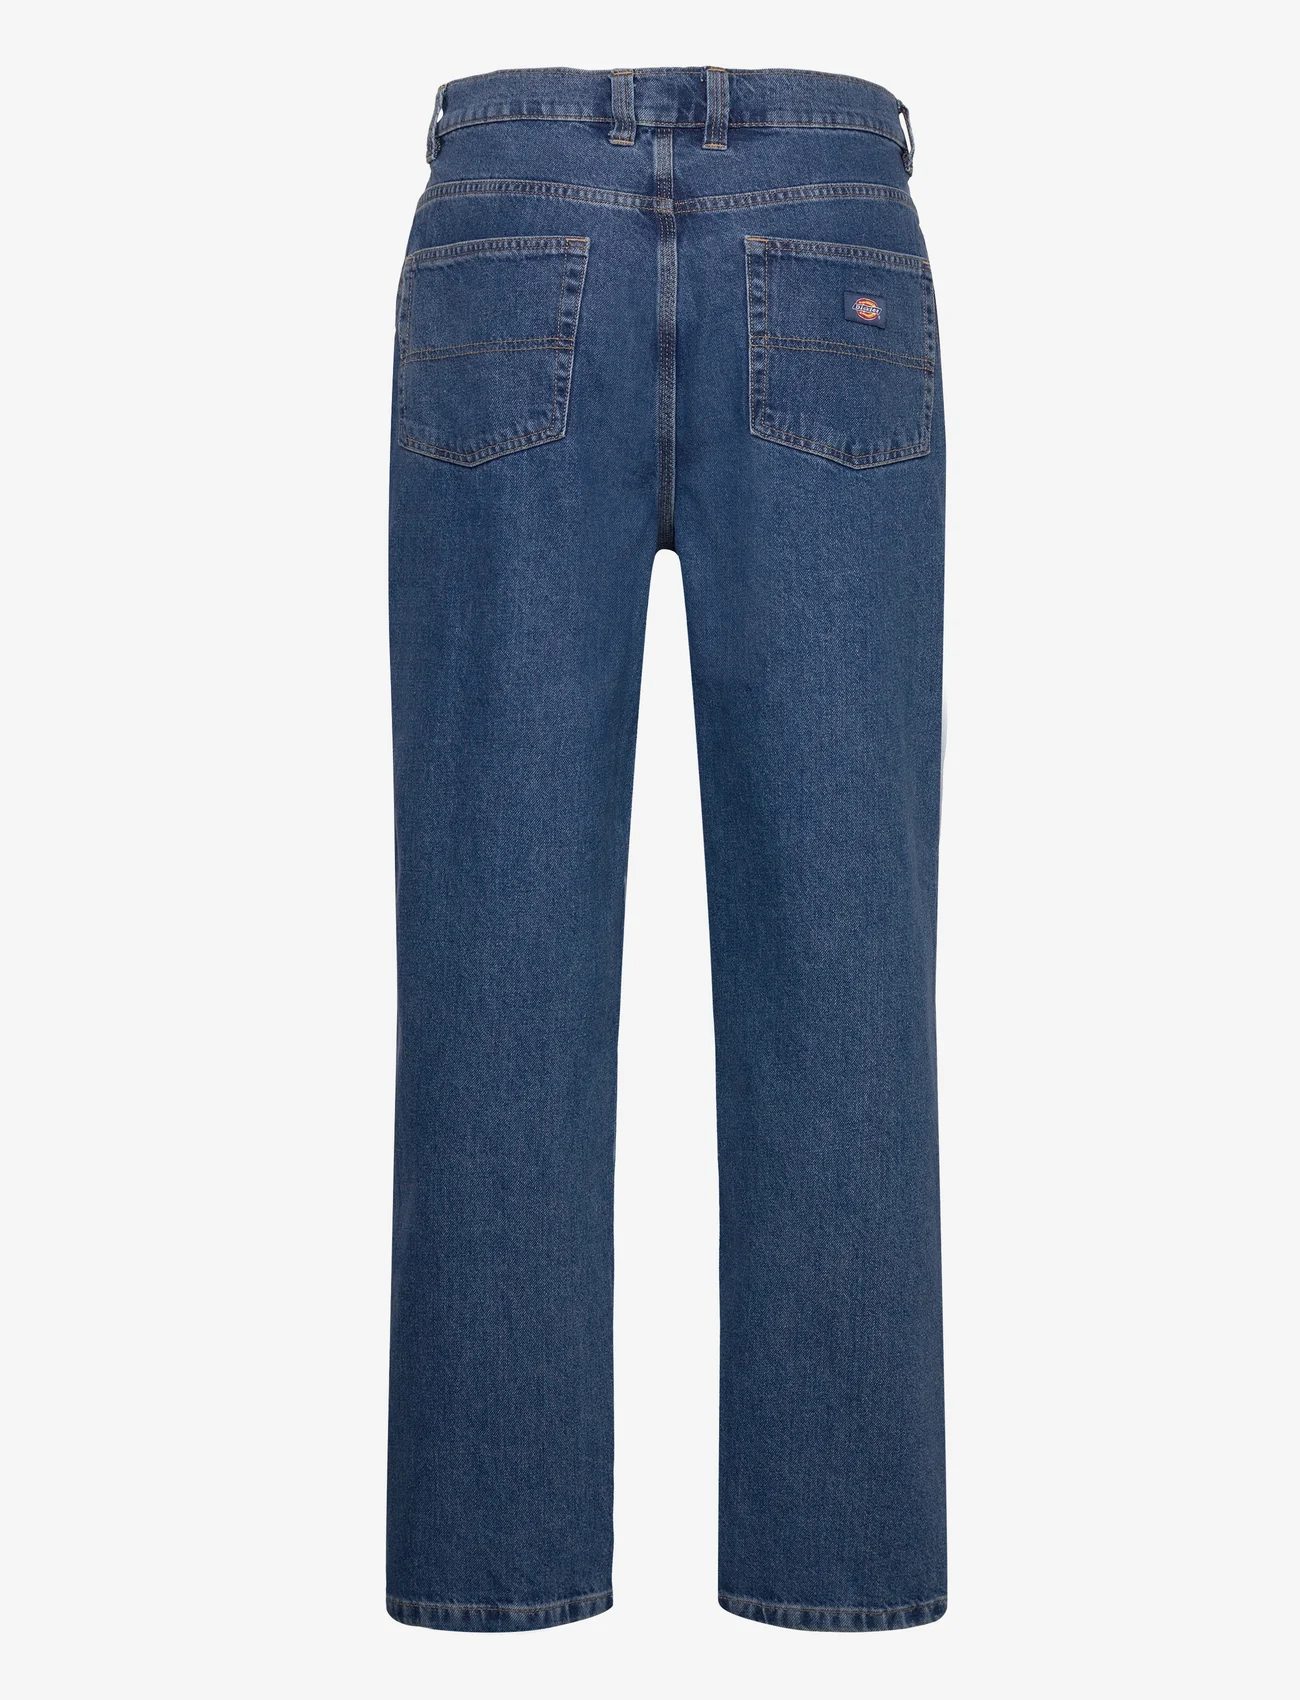 Dickies - THOMASVILLE DENIM PANT - loose jeans - classic blue - 1